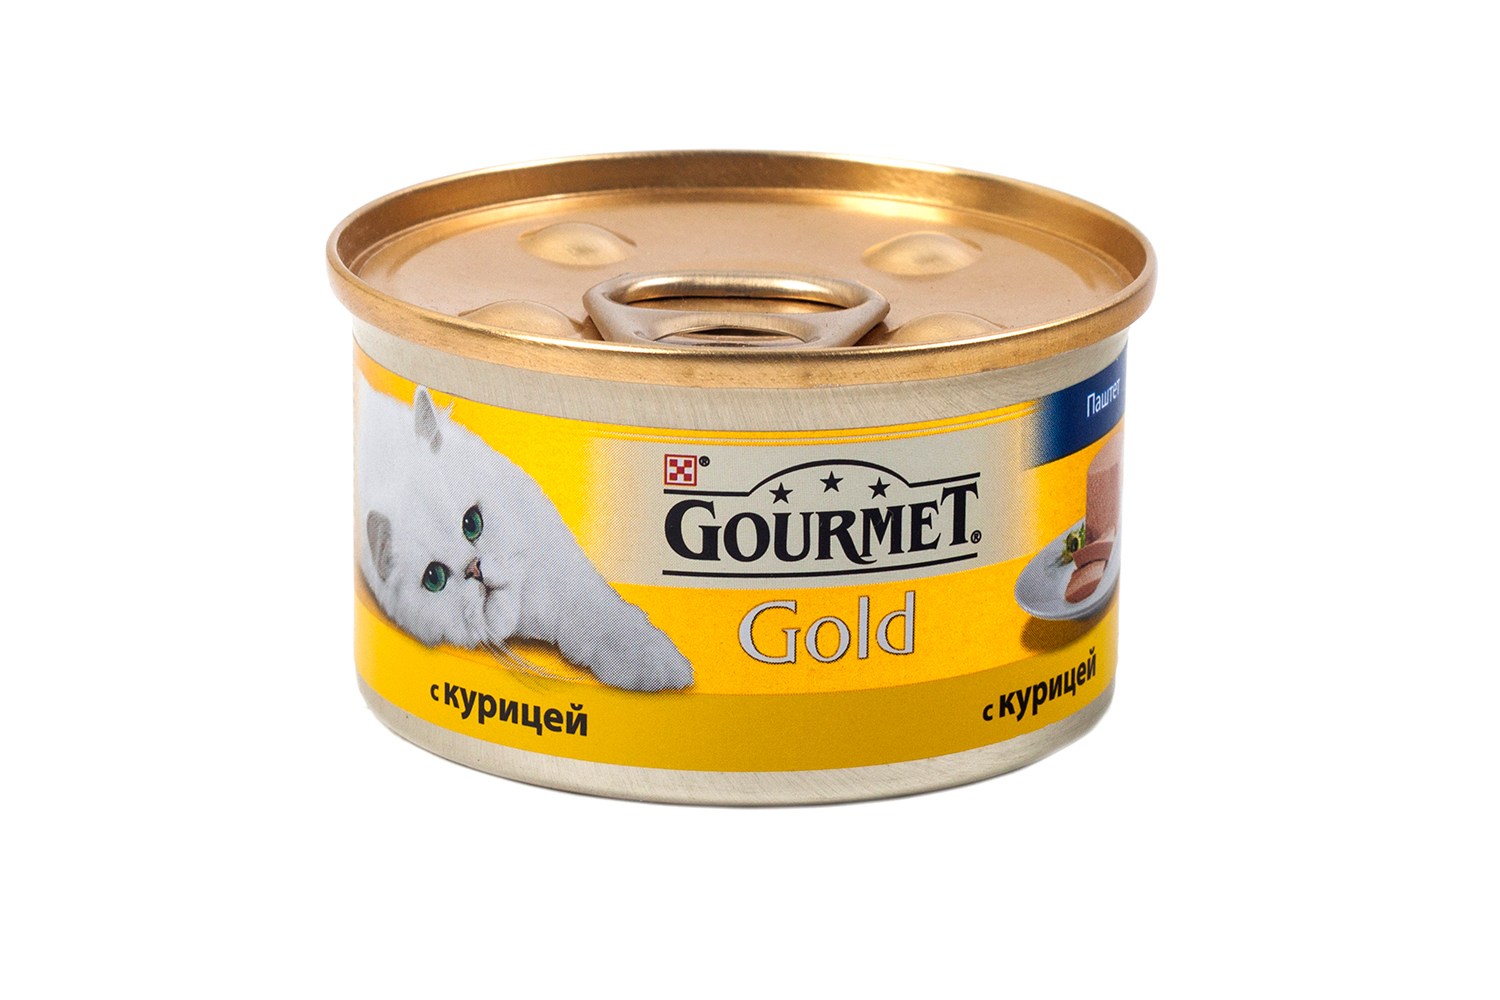 Купить корм паштет. Корм Gourmet Gold курица печень 24*85г ж/б. Gourmet Gold с курицей 85гр. Корм для кошек Gourmet Голд с курицей 85 г. Purina Premium для кошек паштет.